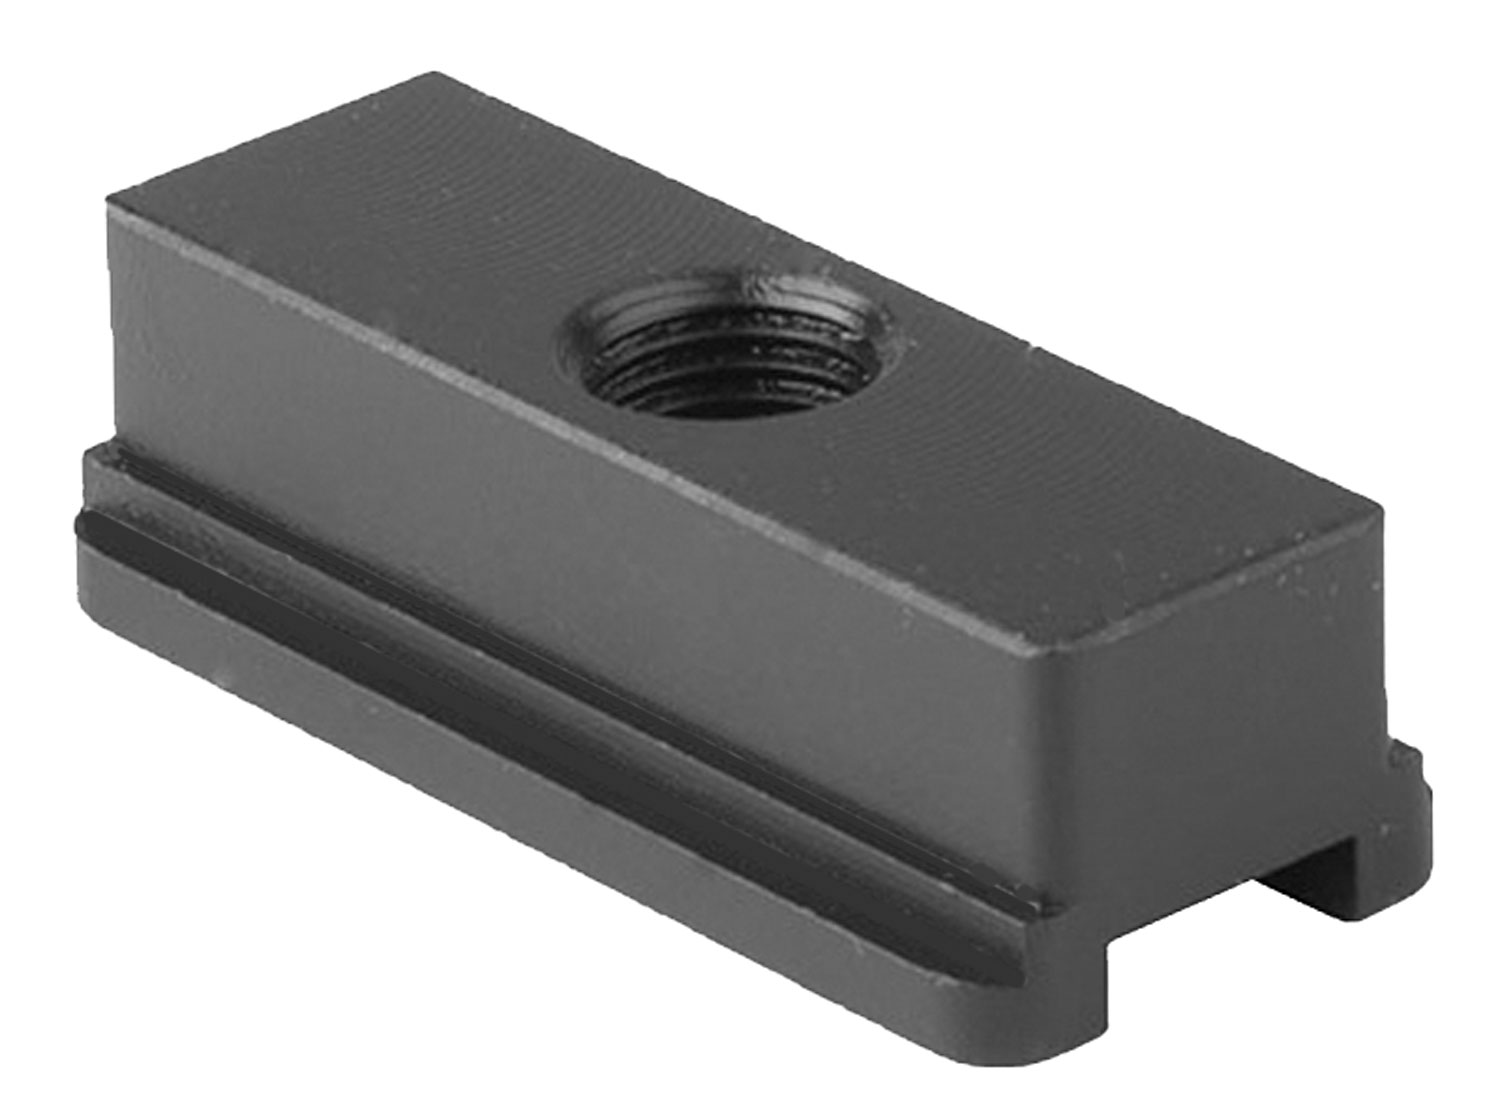 AmeriGlo UTSP135 Universal Shoe Plate  Black Steel for Kahr PM 9mm, CW 40 S&W